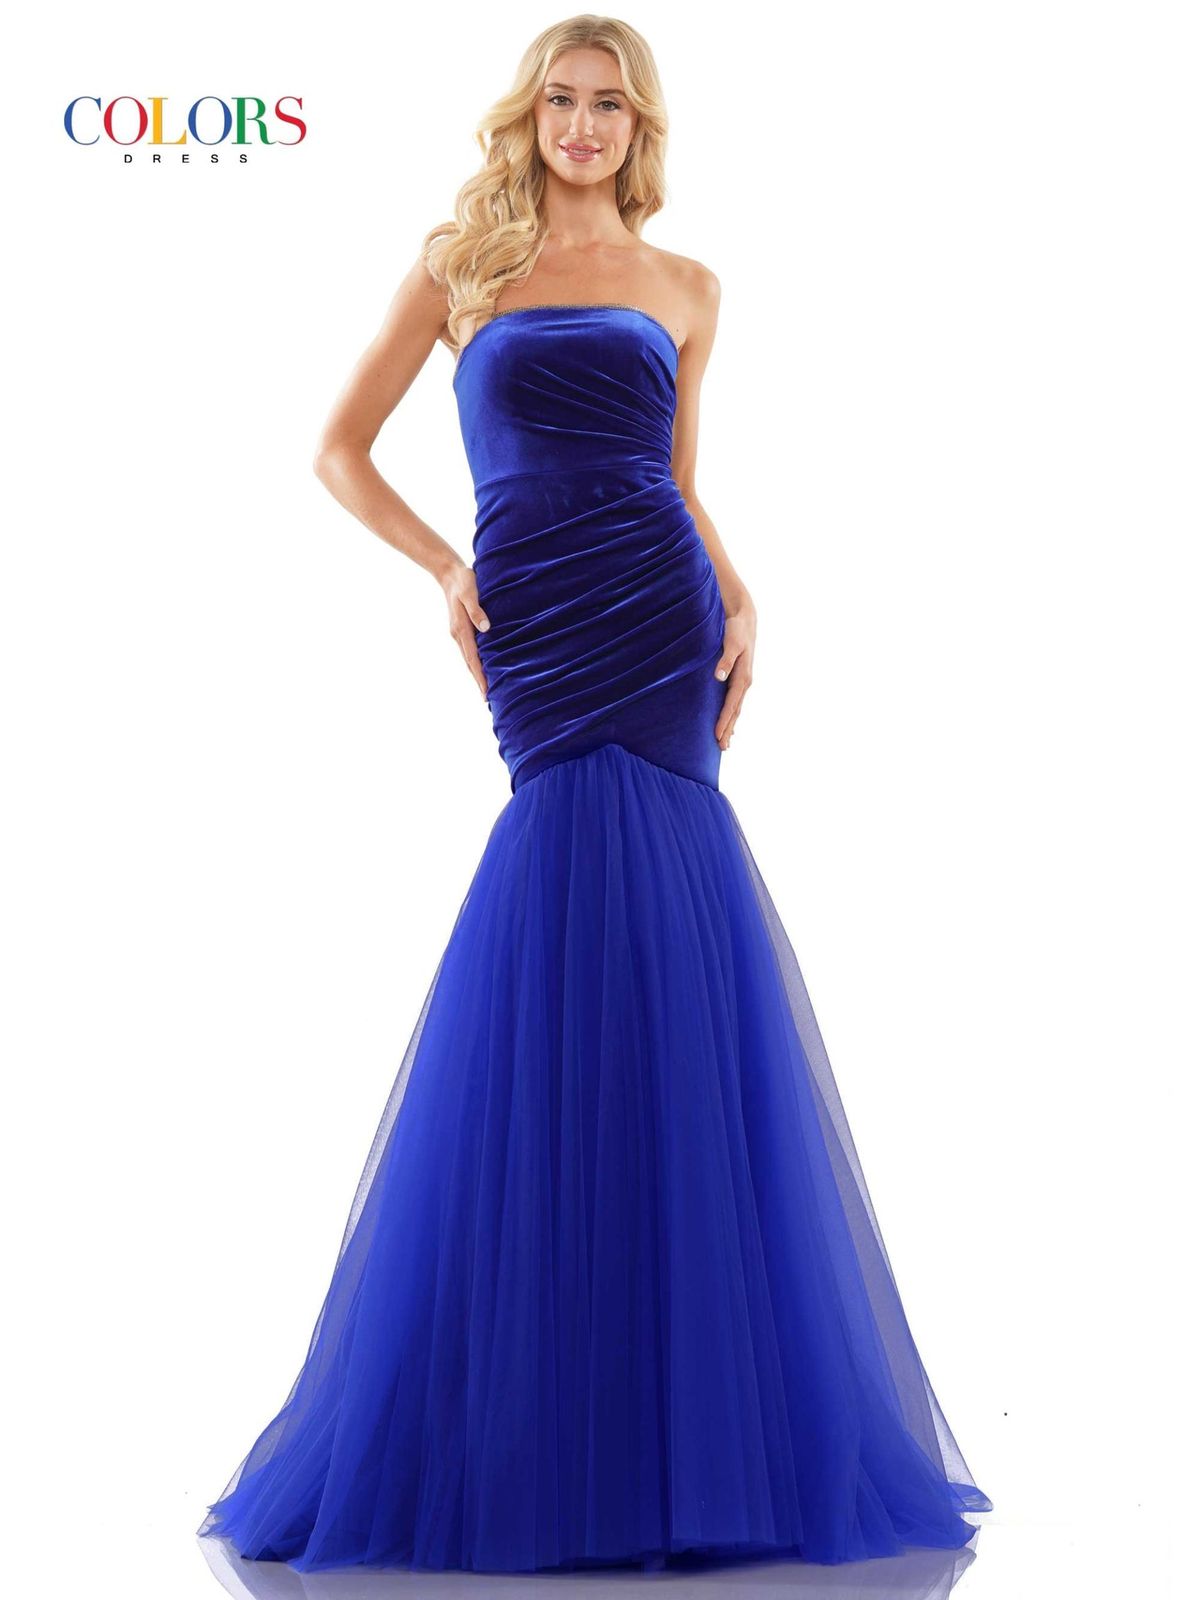 Style HONEY_BURGUNDY0_355C1 Colors Size 0 Prom Strapless Velvet Red Mermaid Dress on Queenly